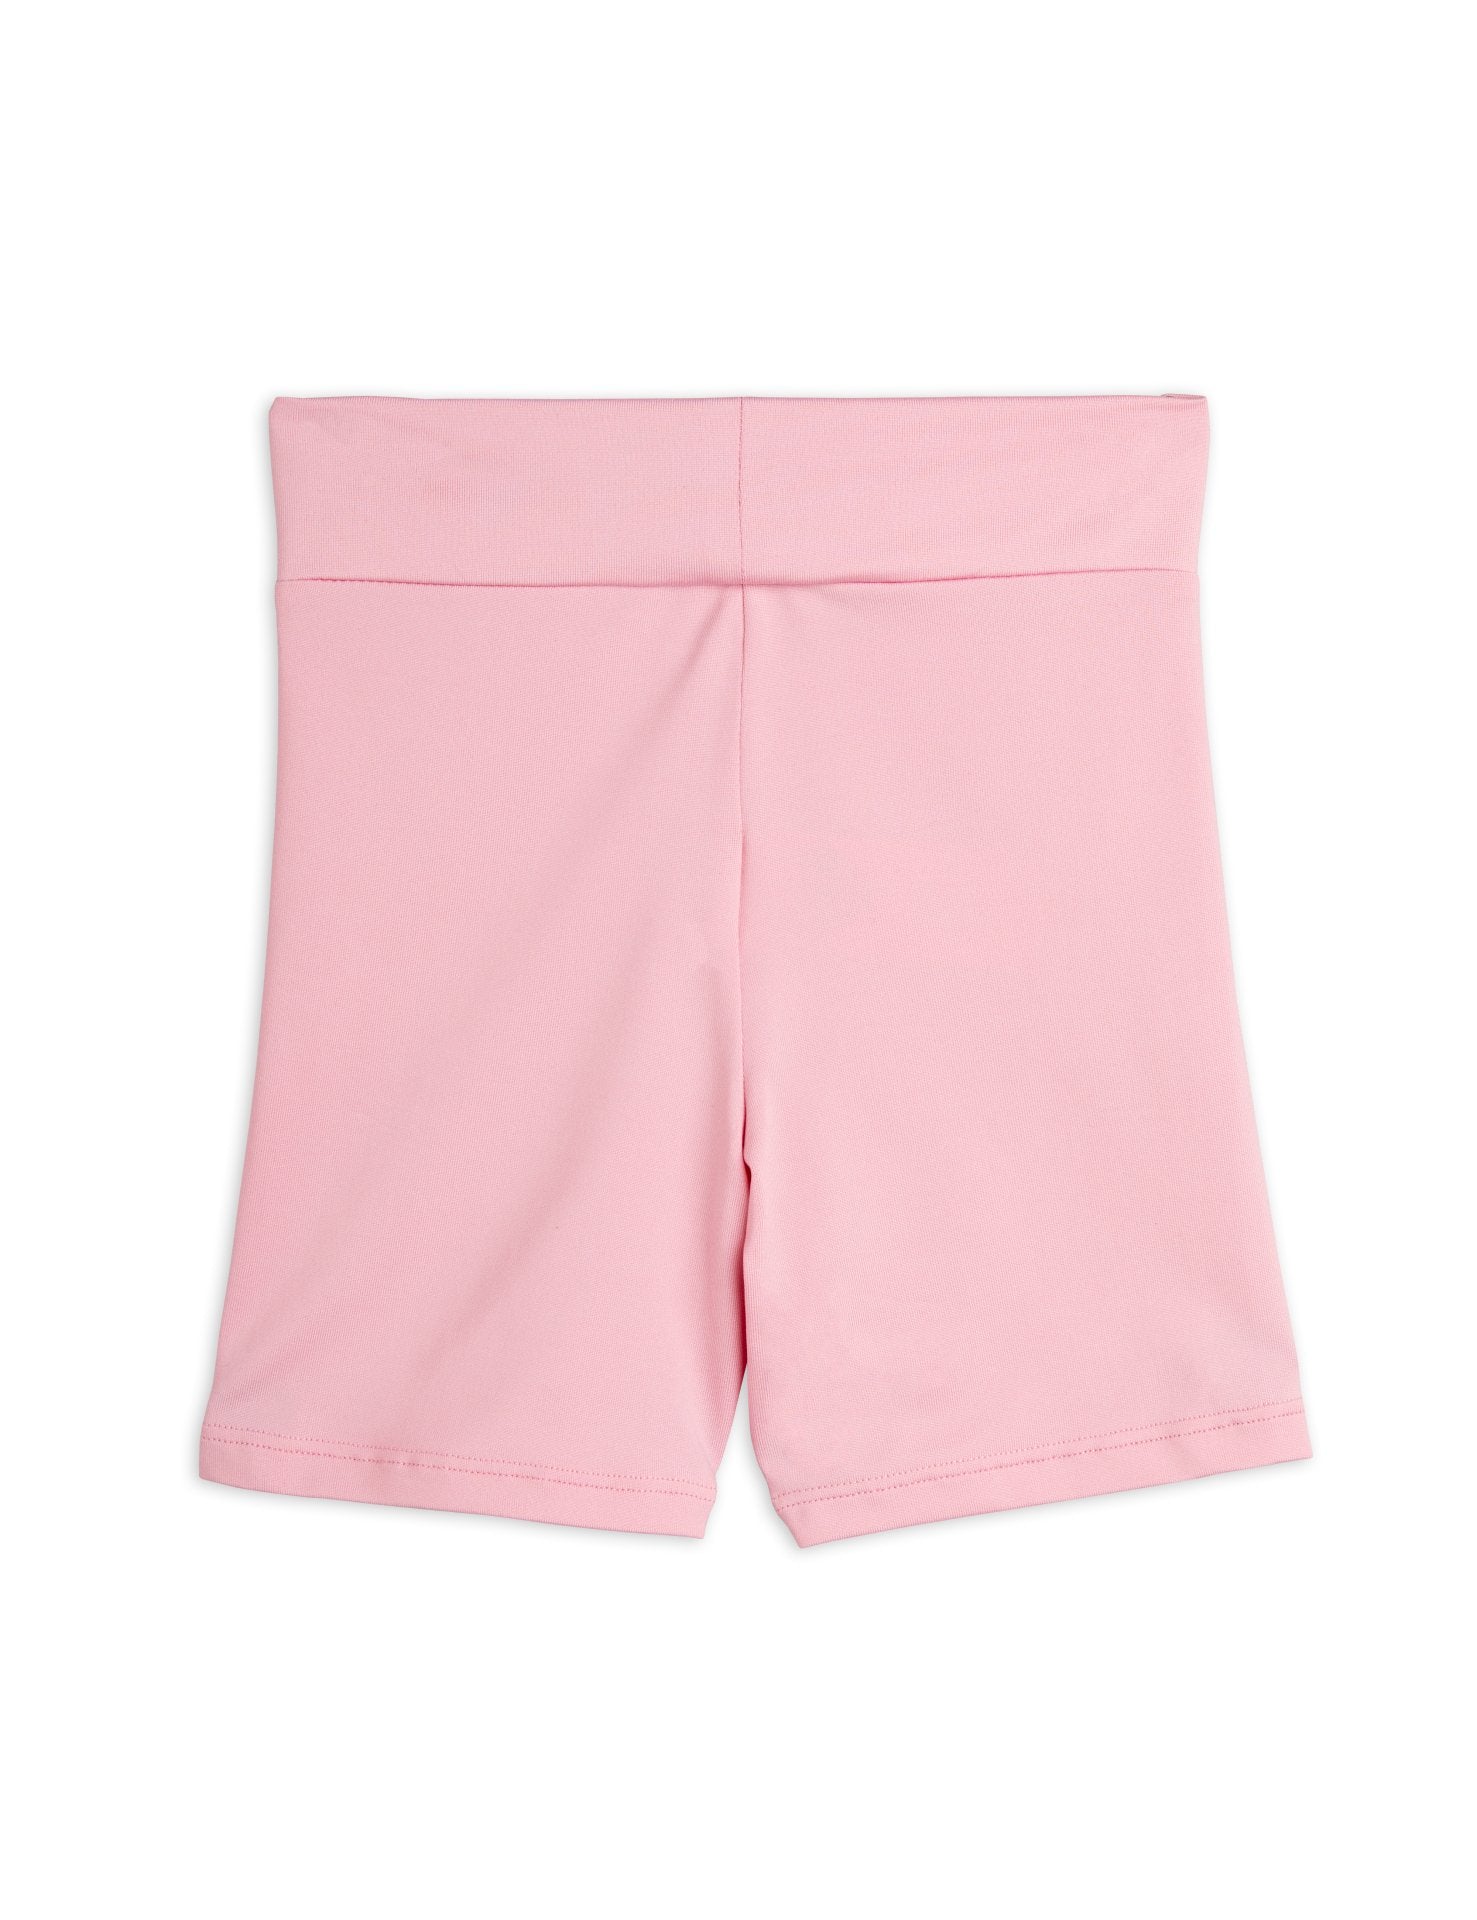 mini rodini super sporty quickdry bike shorts - pink